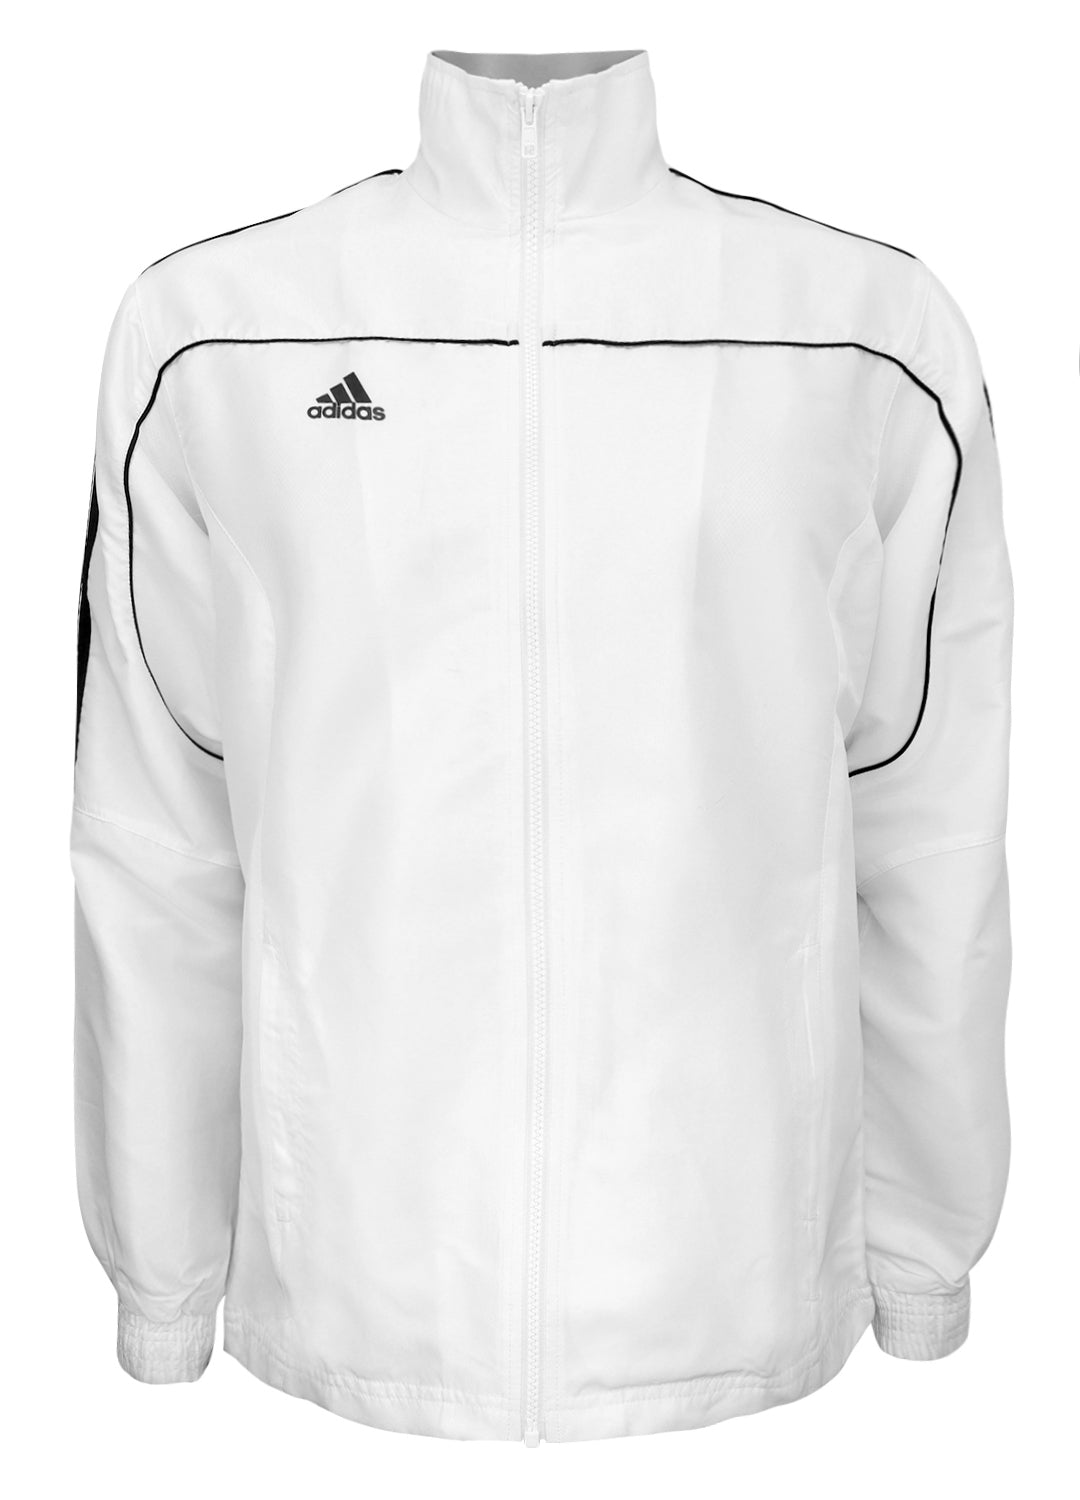 adidas jacket white with black stripes